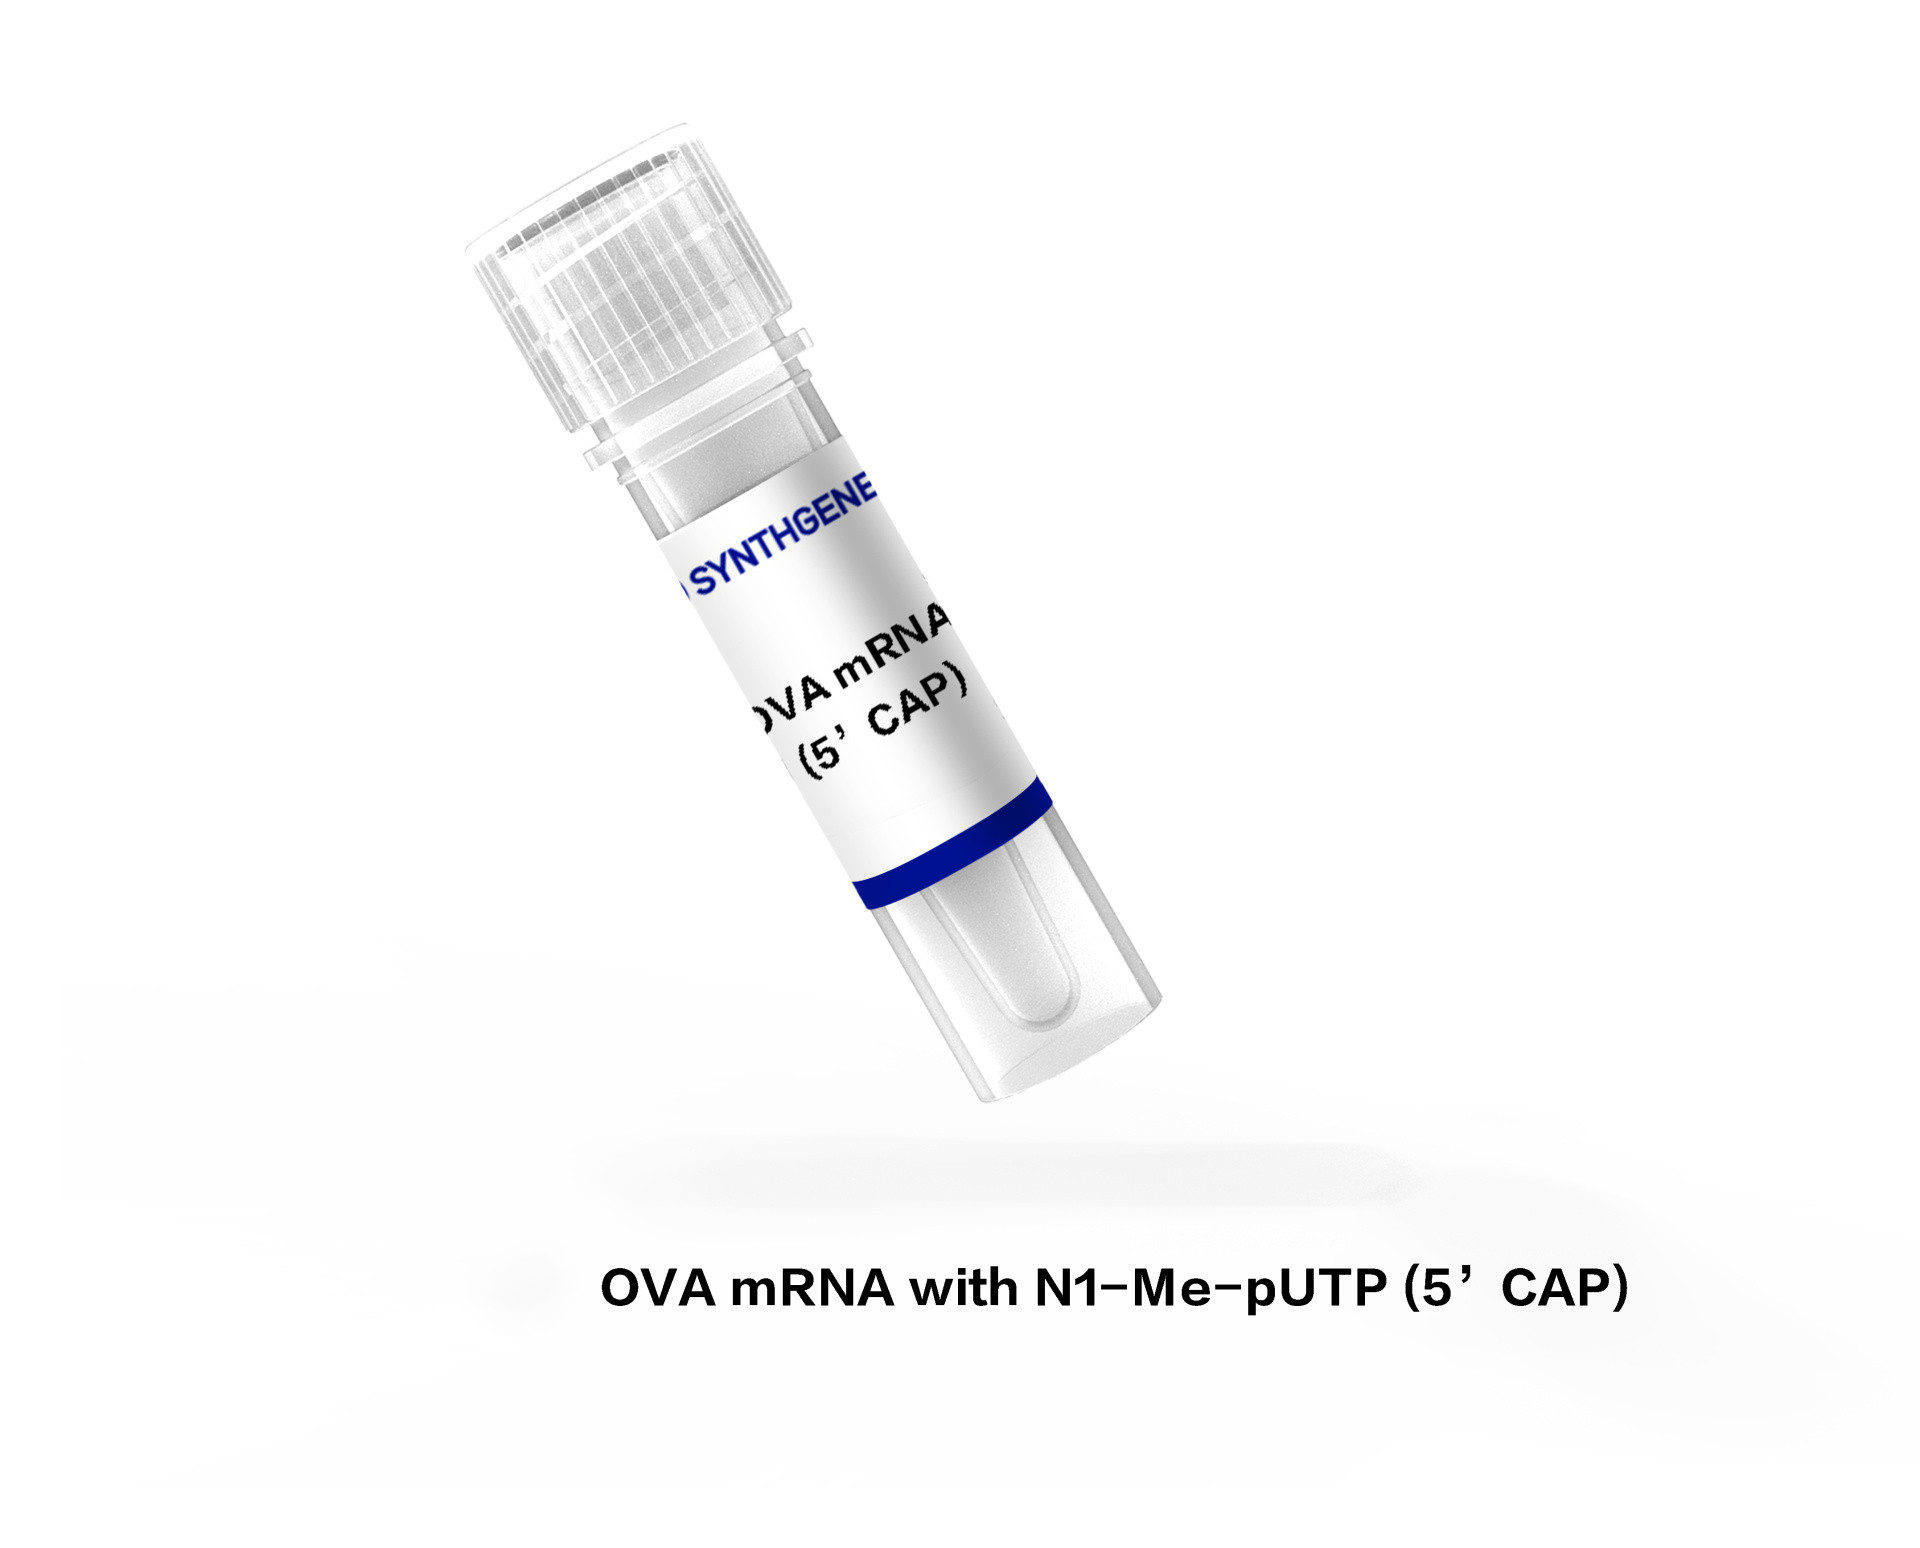 OVA mRNA with N1-Me-pUTP (5’CAP)